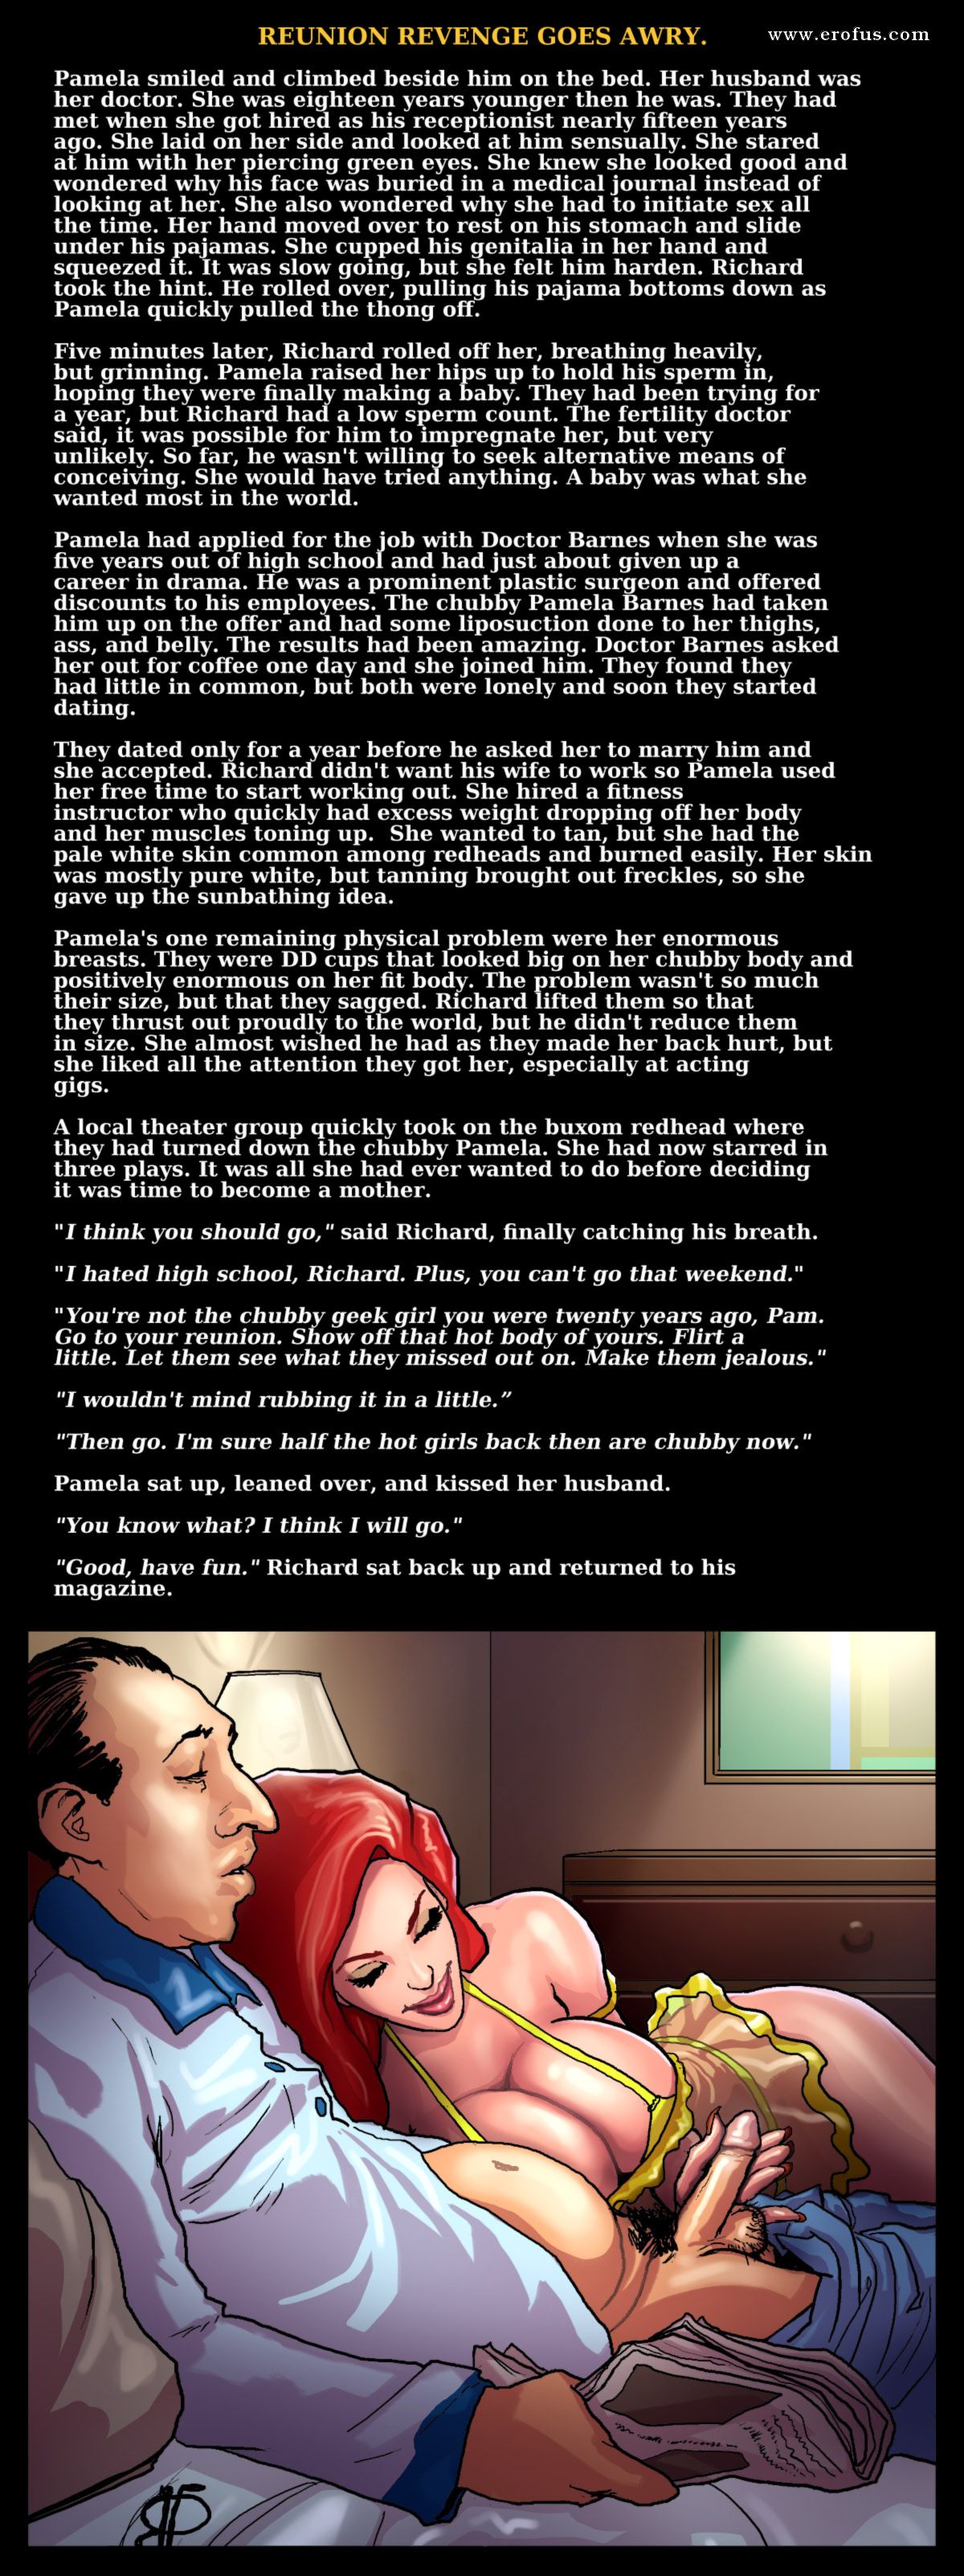 Page 3 blacknwhitecomics_com-comix/illustrated-stories/reunion-revenge-goes-awry Erofus